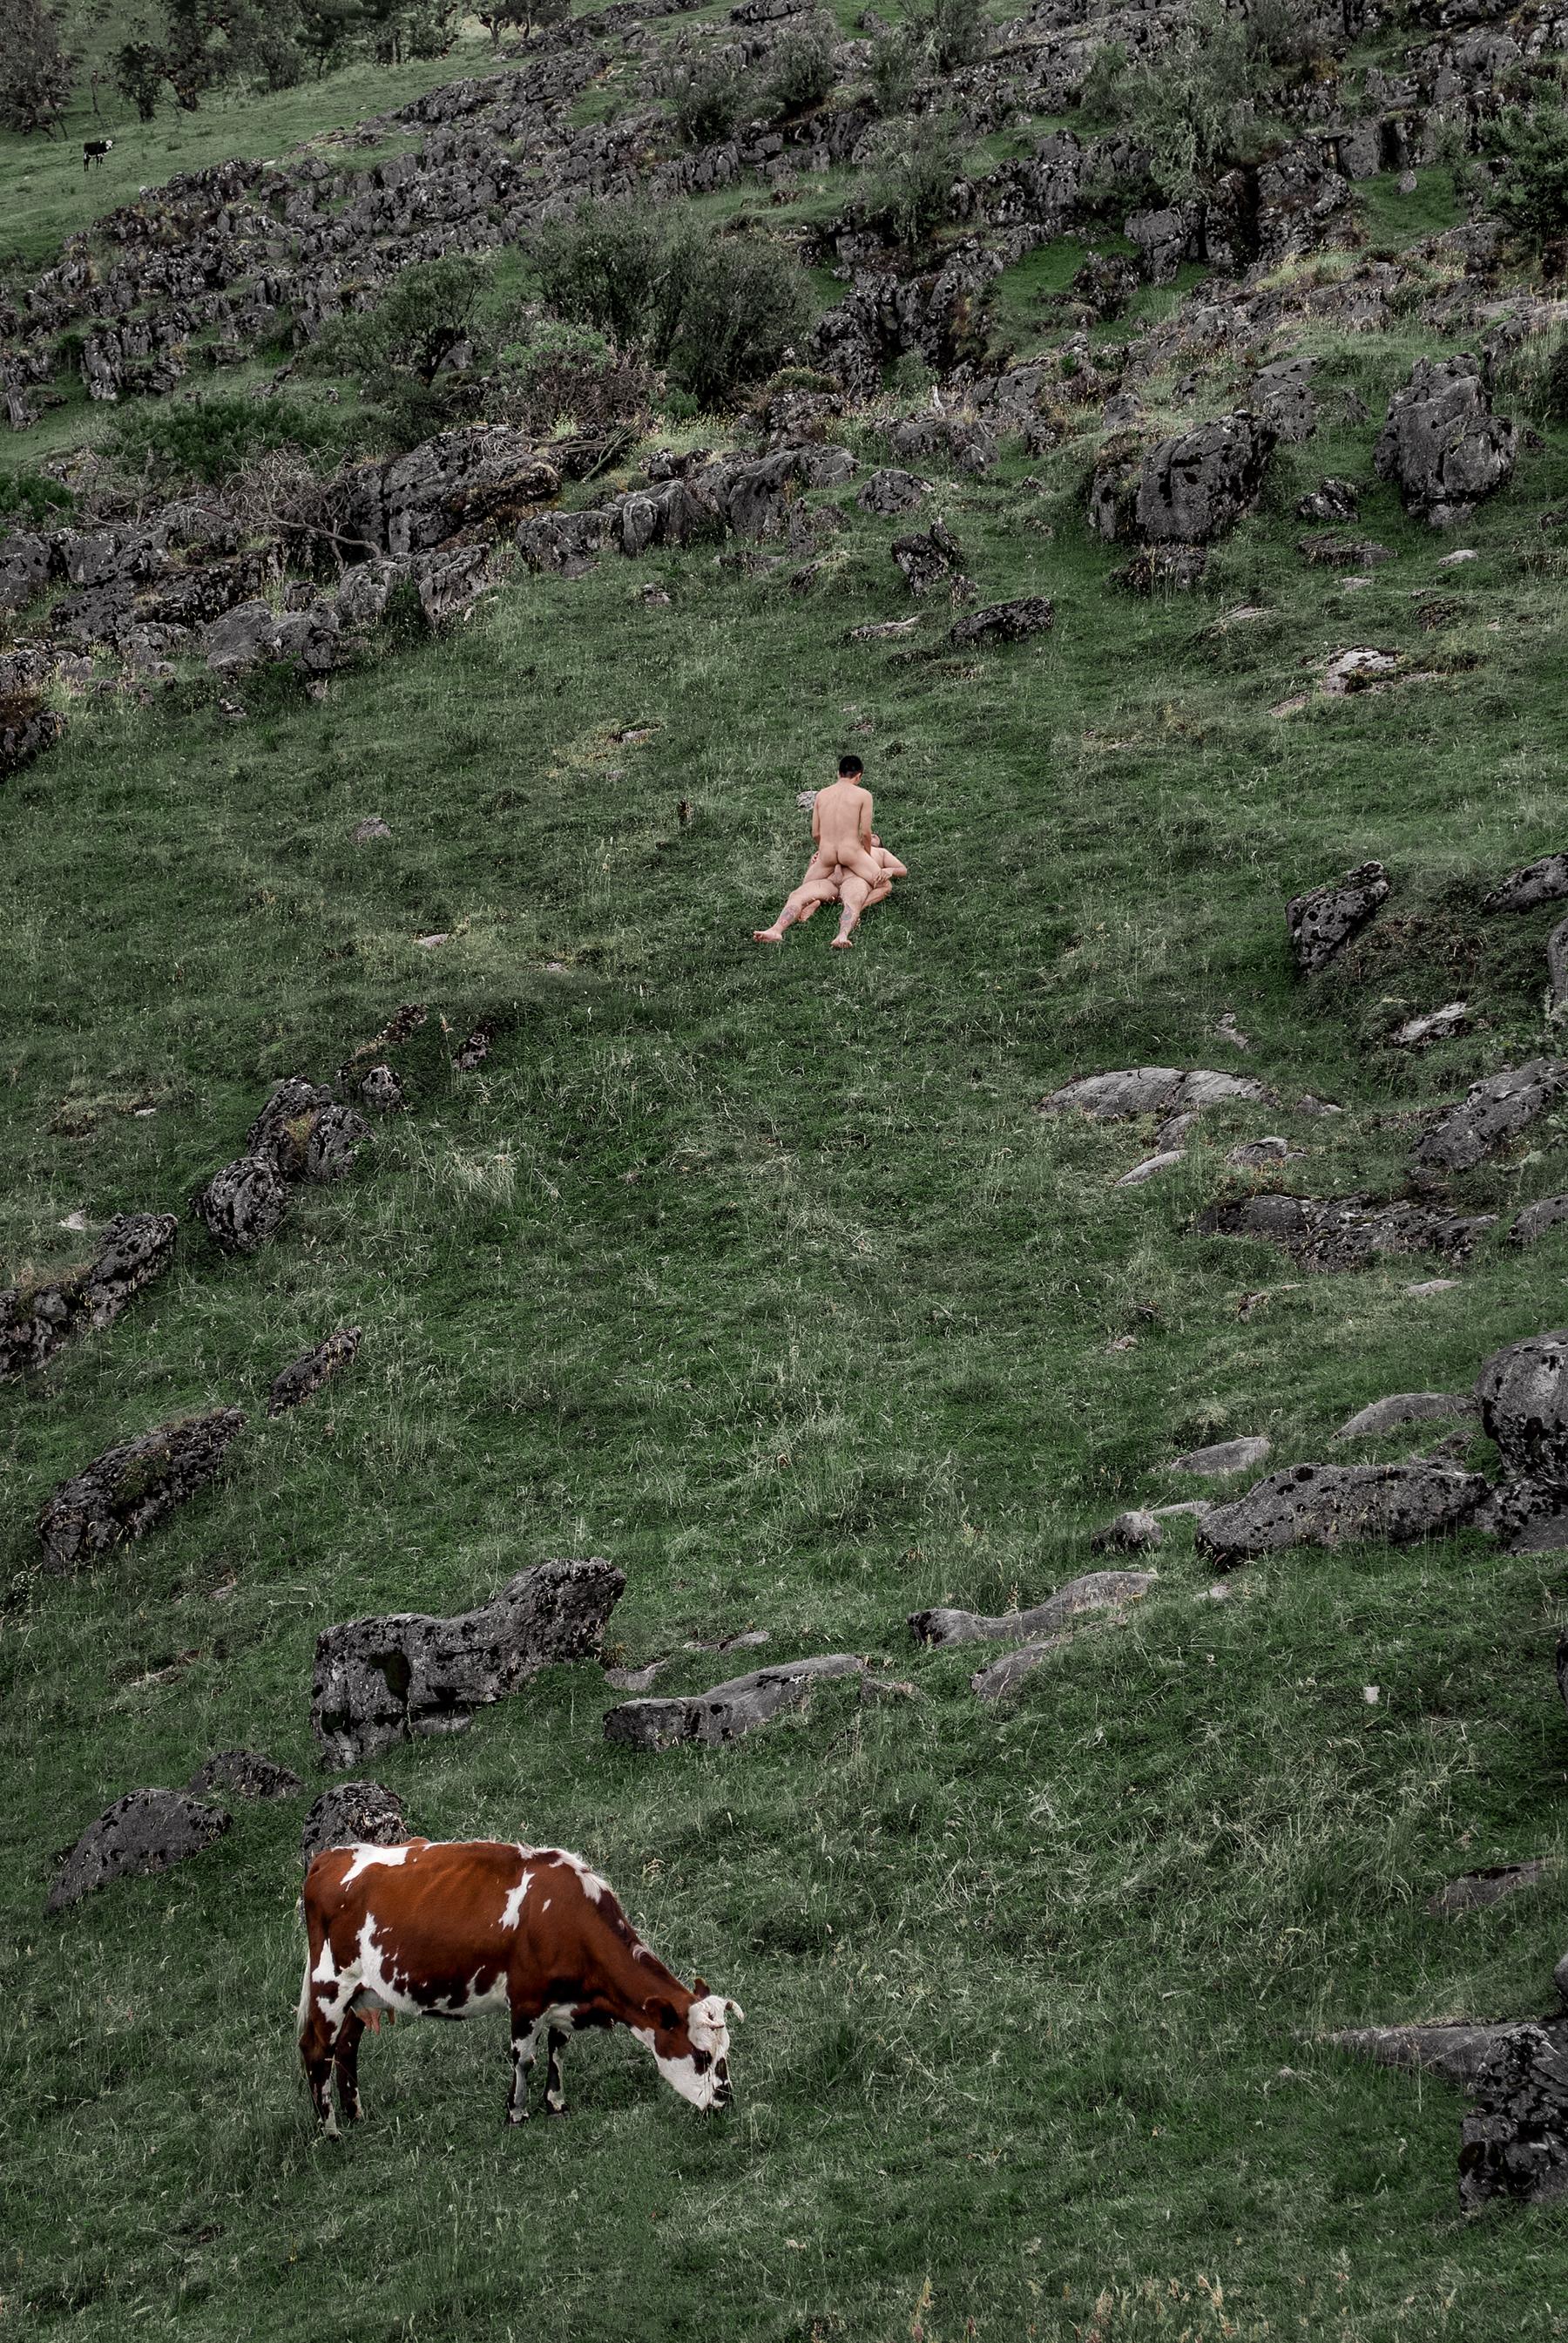 Javier Rey Nude Photograph - Unión 2. Nude in a landscape color photo. From the Series Unión